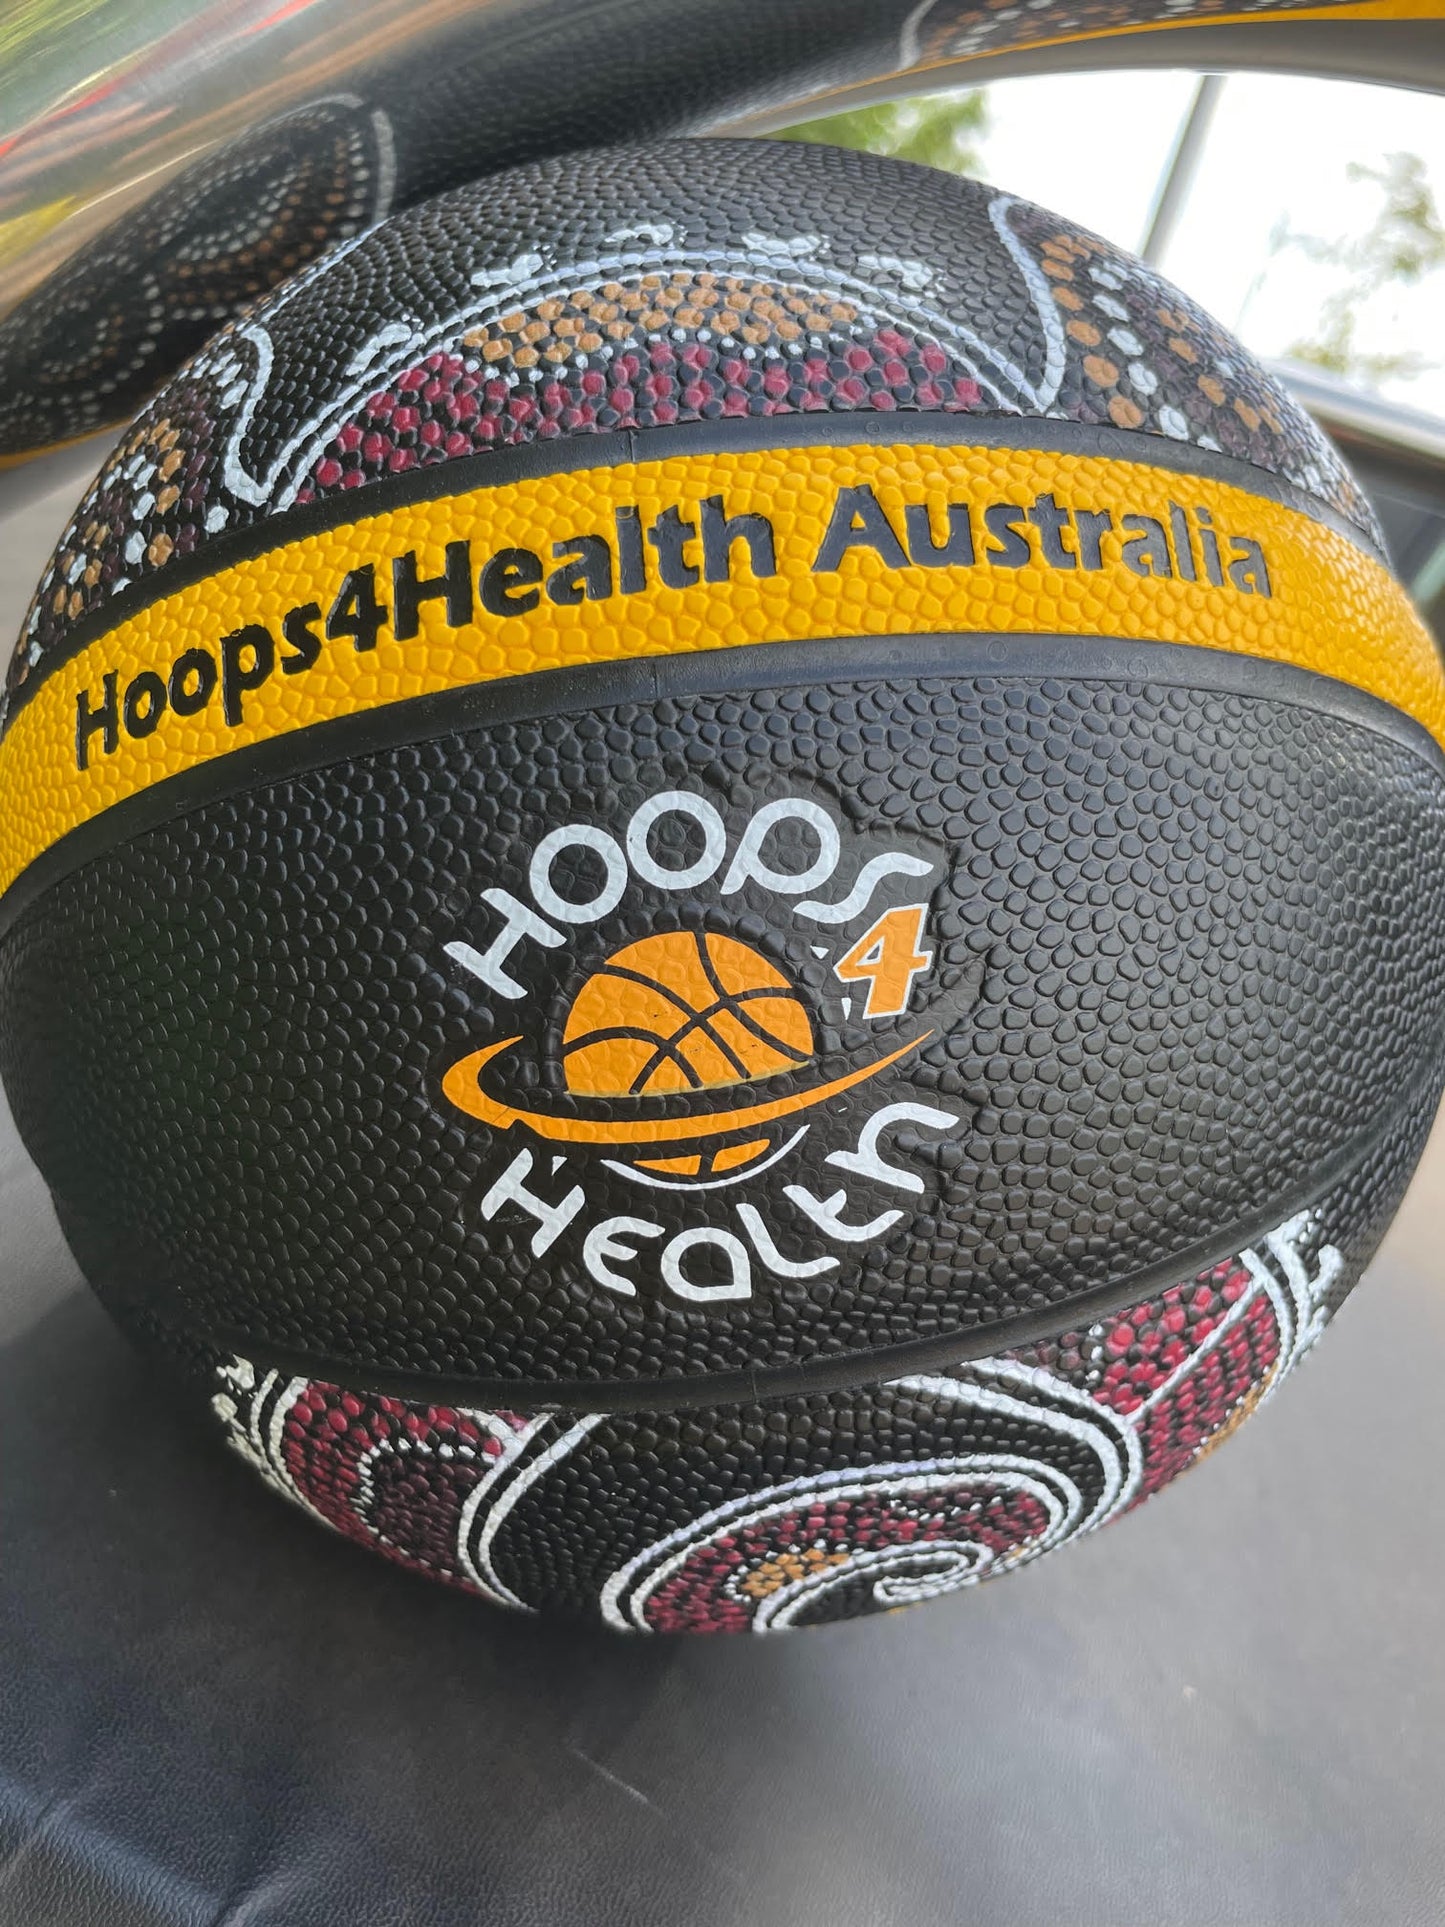 Hoops 4 Health Basketballs